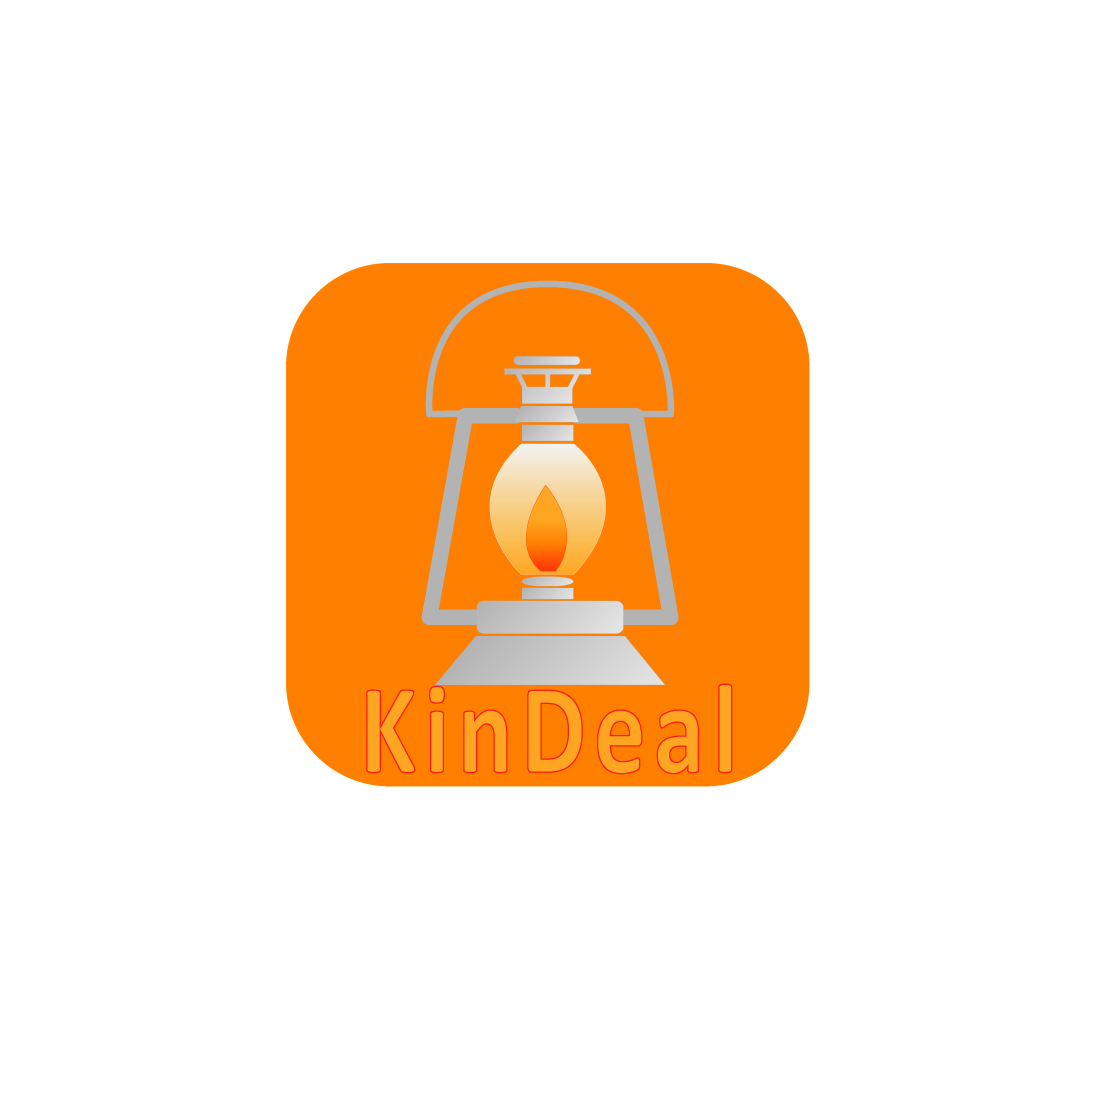 Kindeal - TShirt Print Design preview image.